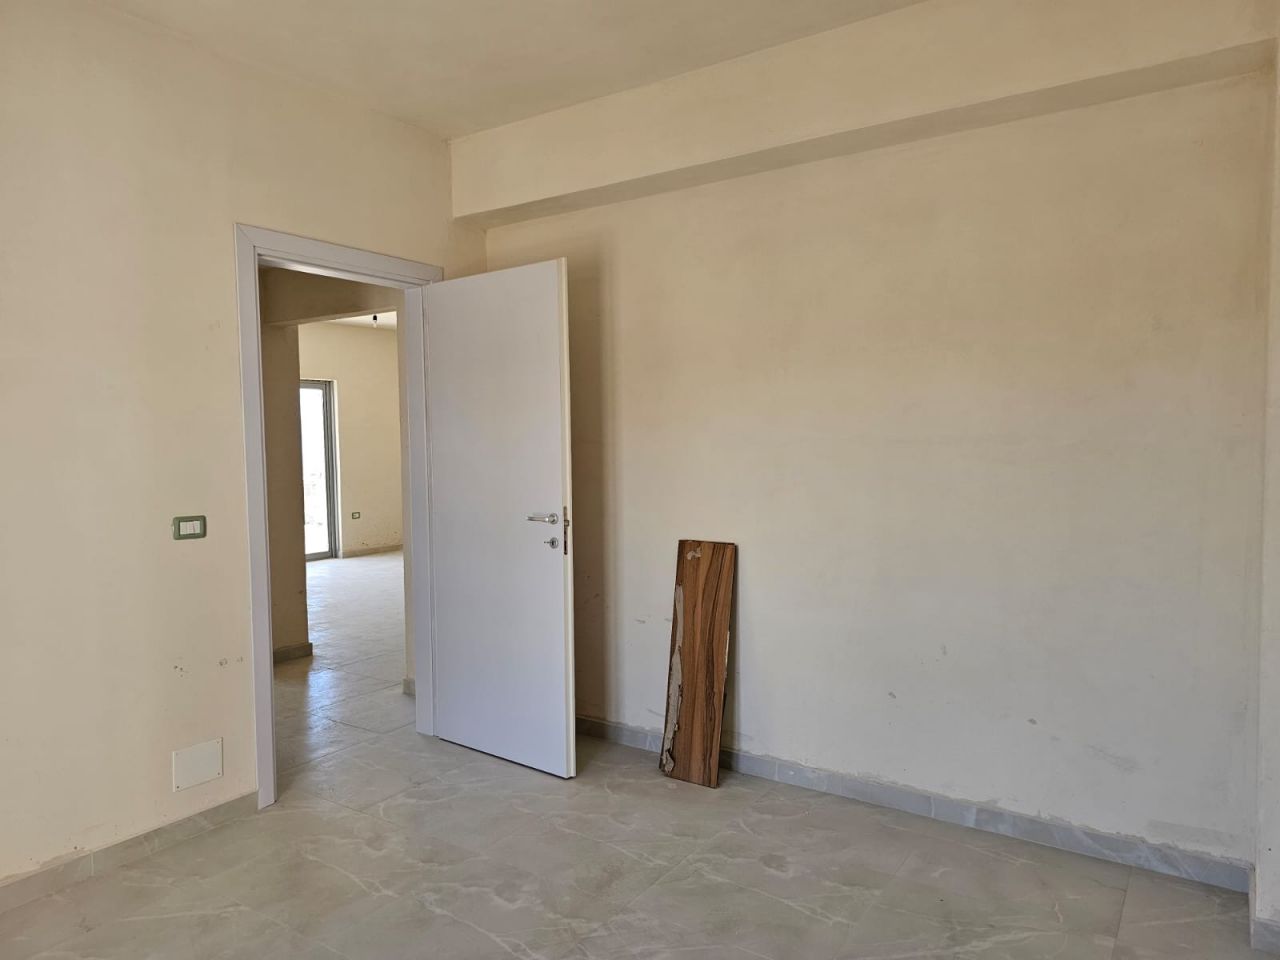 Two Bedroom Apartment For Sale In Saranda Albania